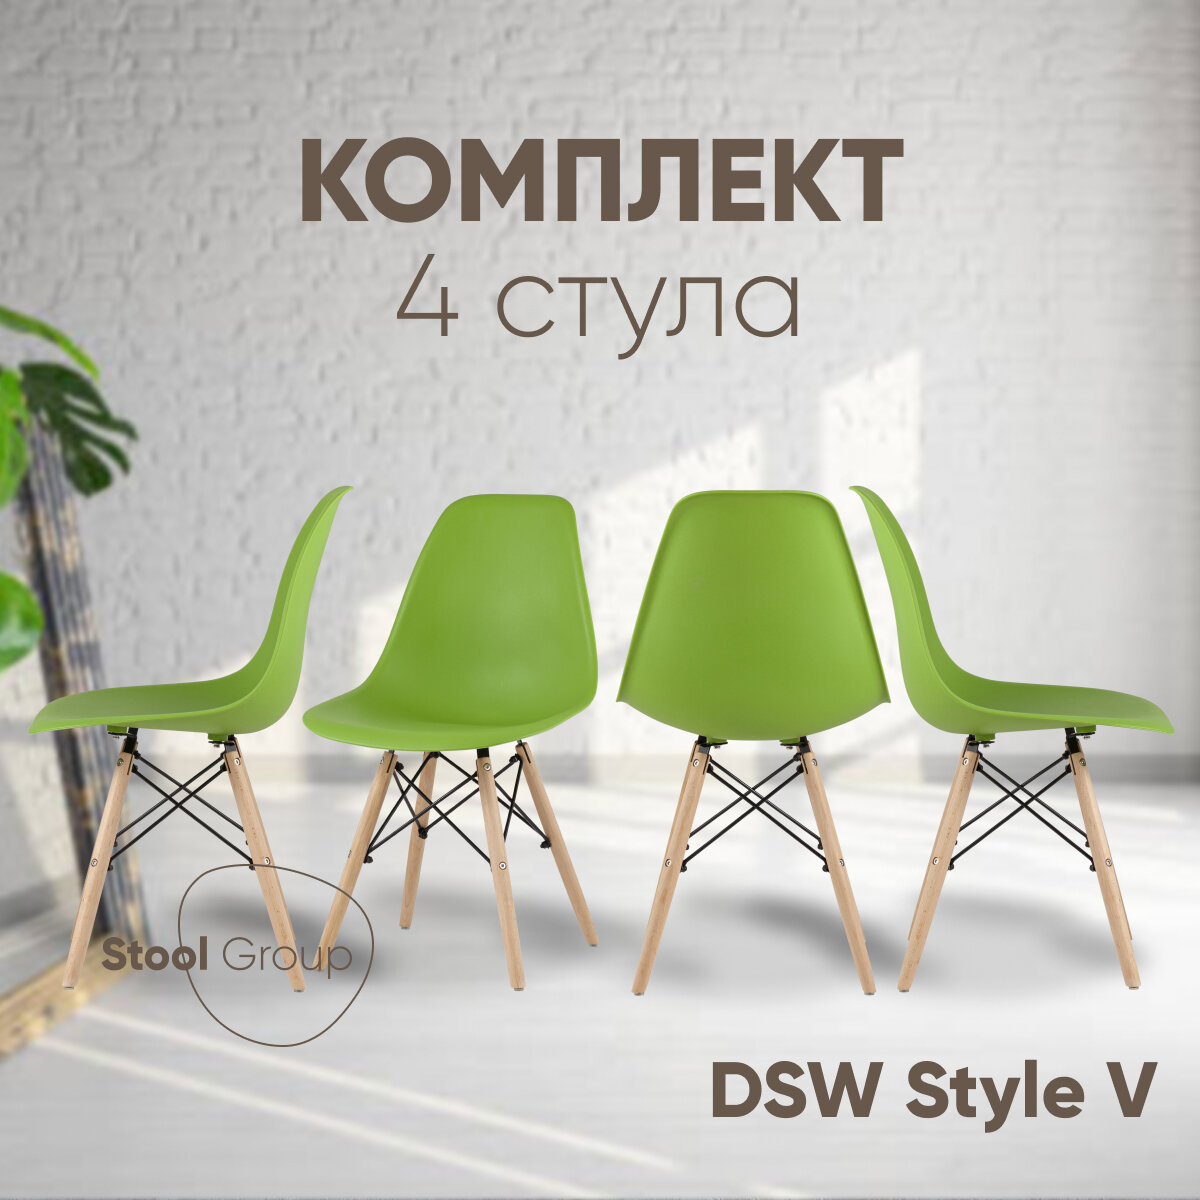 Стул для кухни DSW Style V, зеленый (комплект 4 стула)